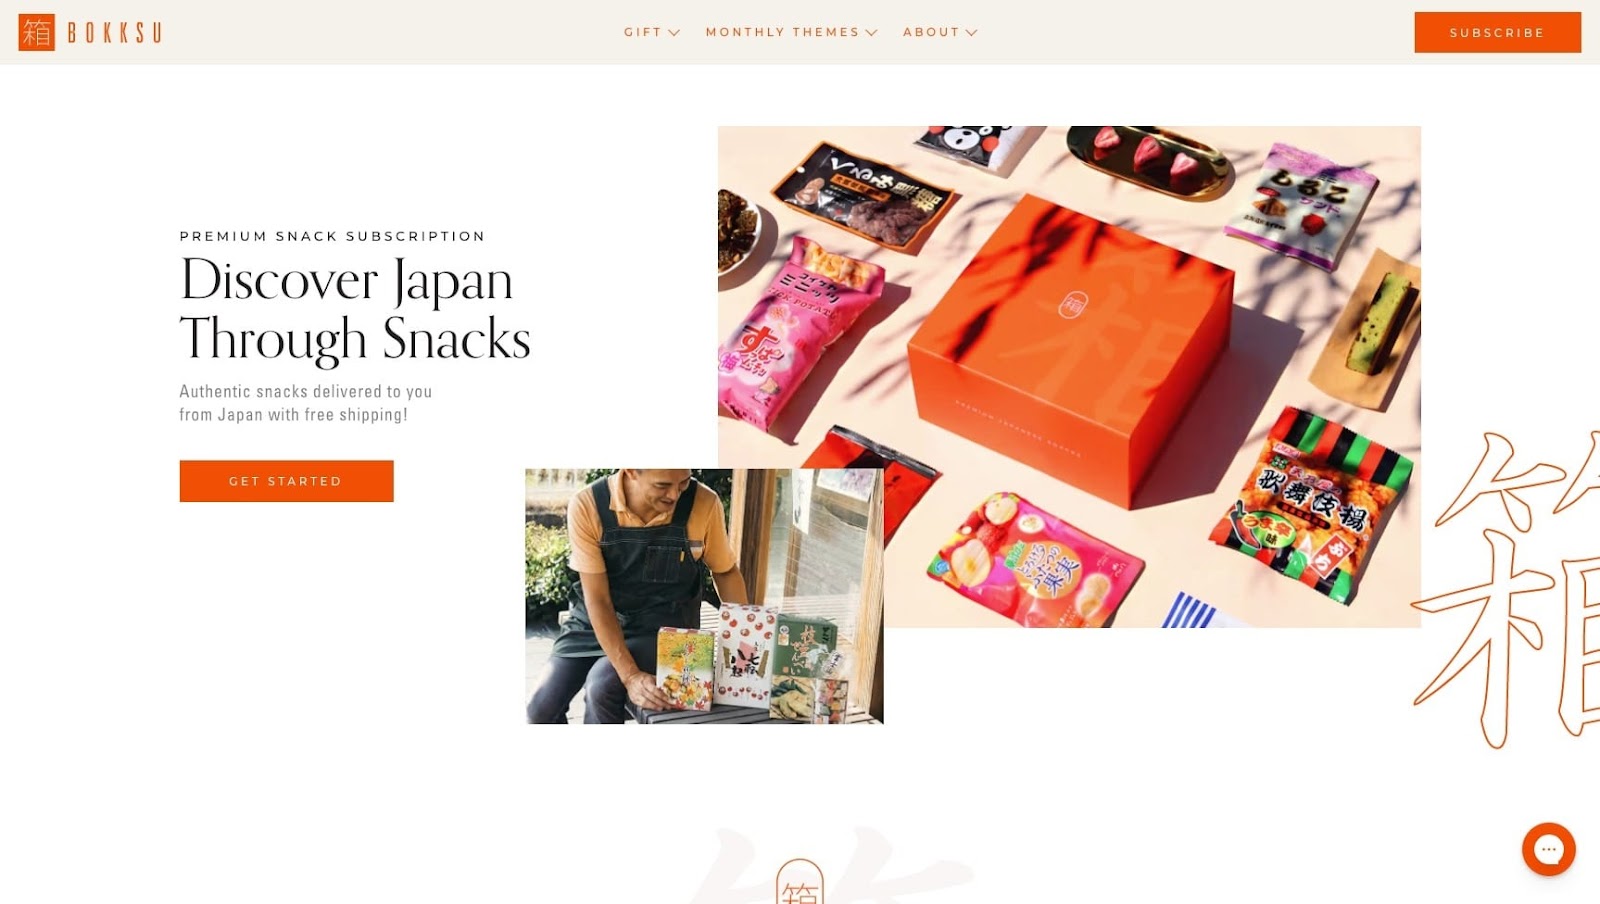 bokksu homepage subscription snacks japanese